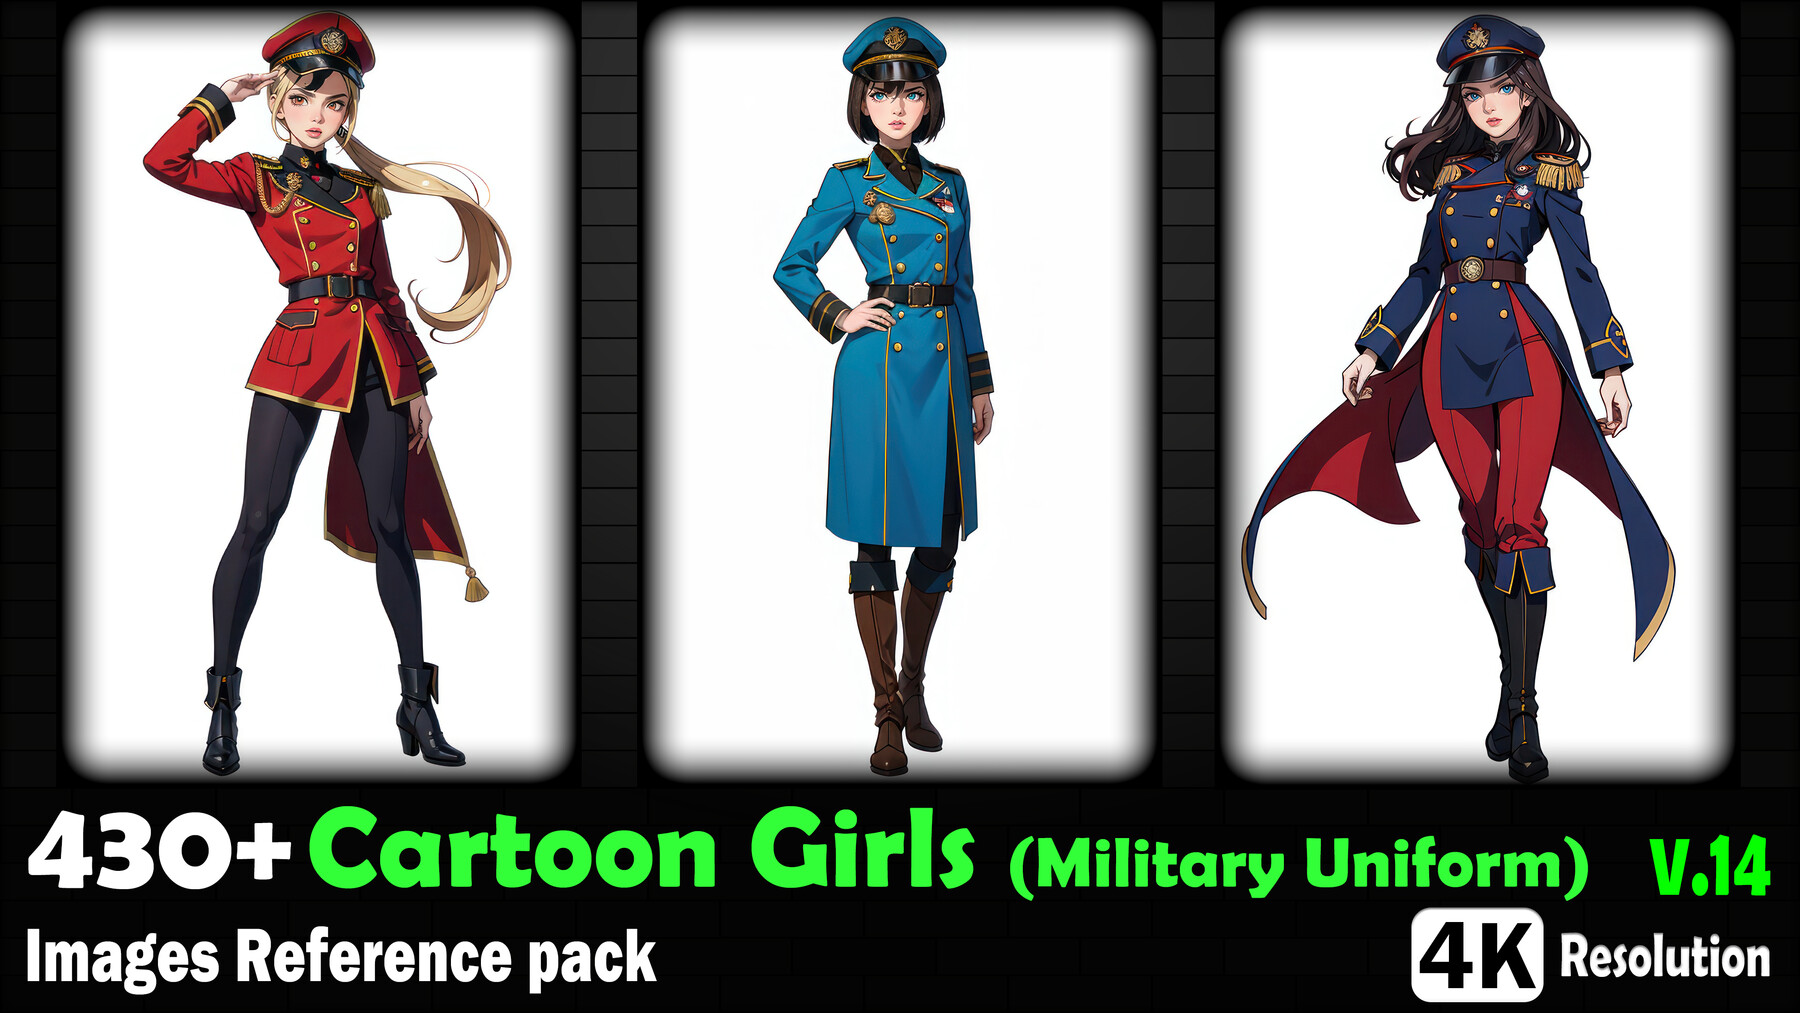 ArtStation - 430+ Cartoon Girls (Military Uniform) Images